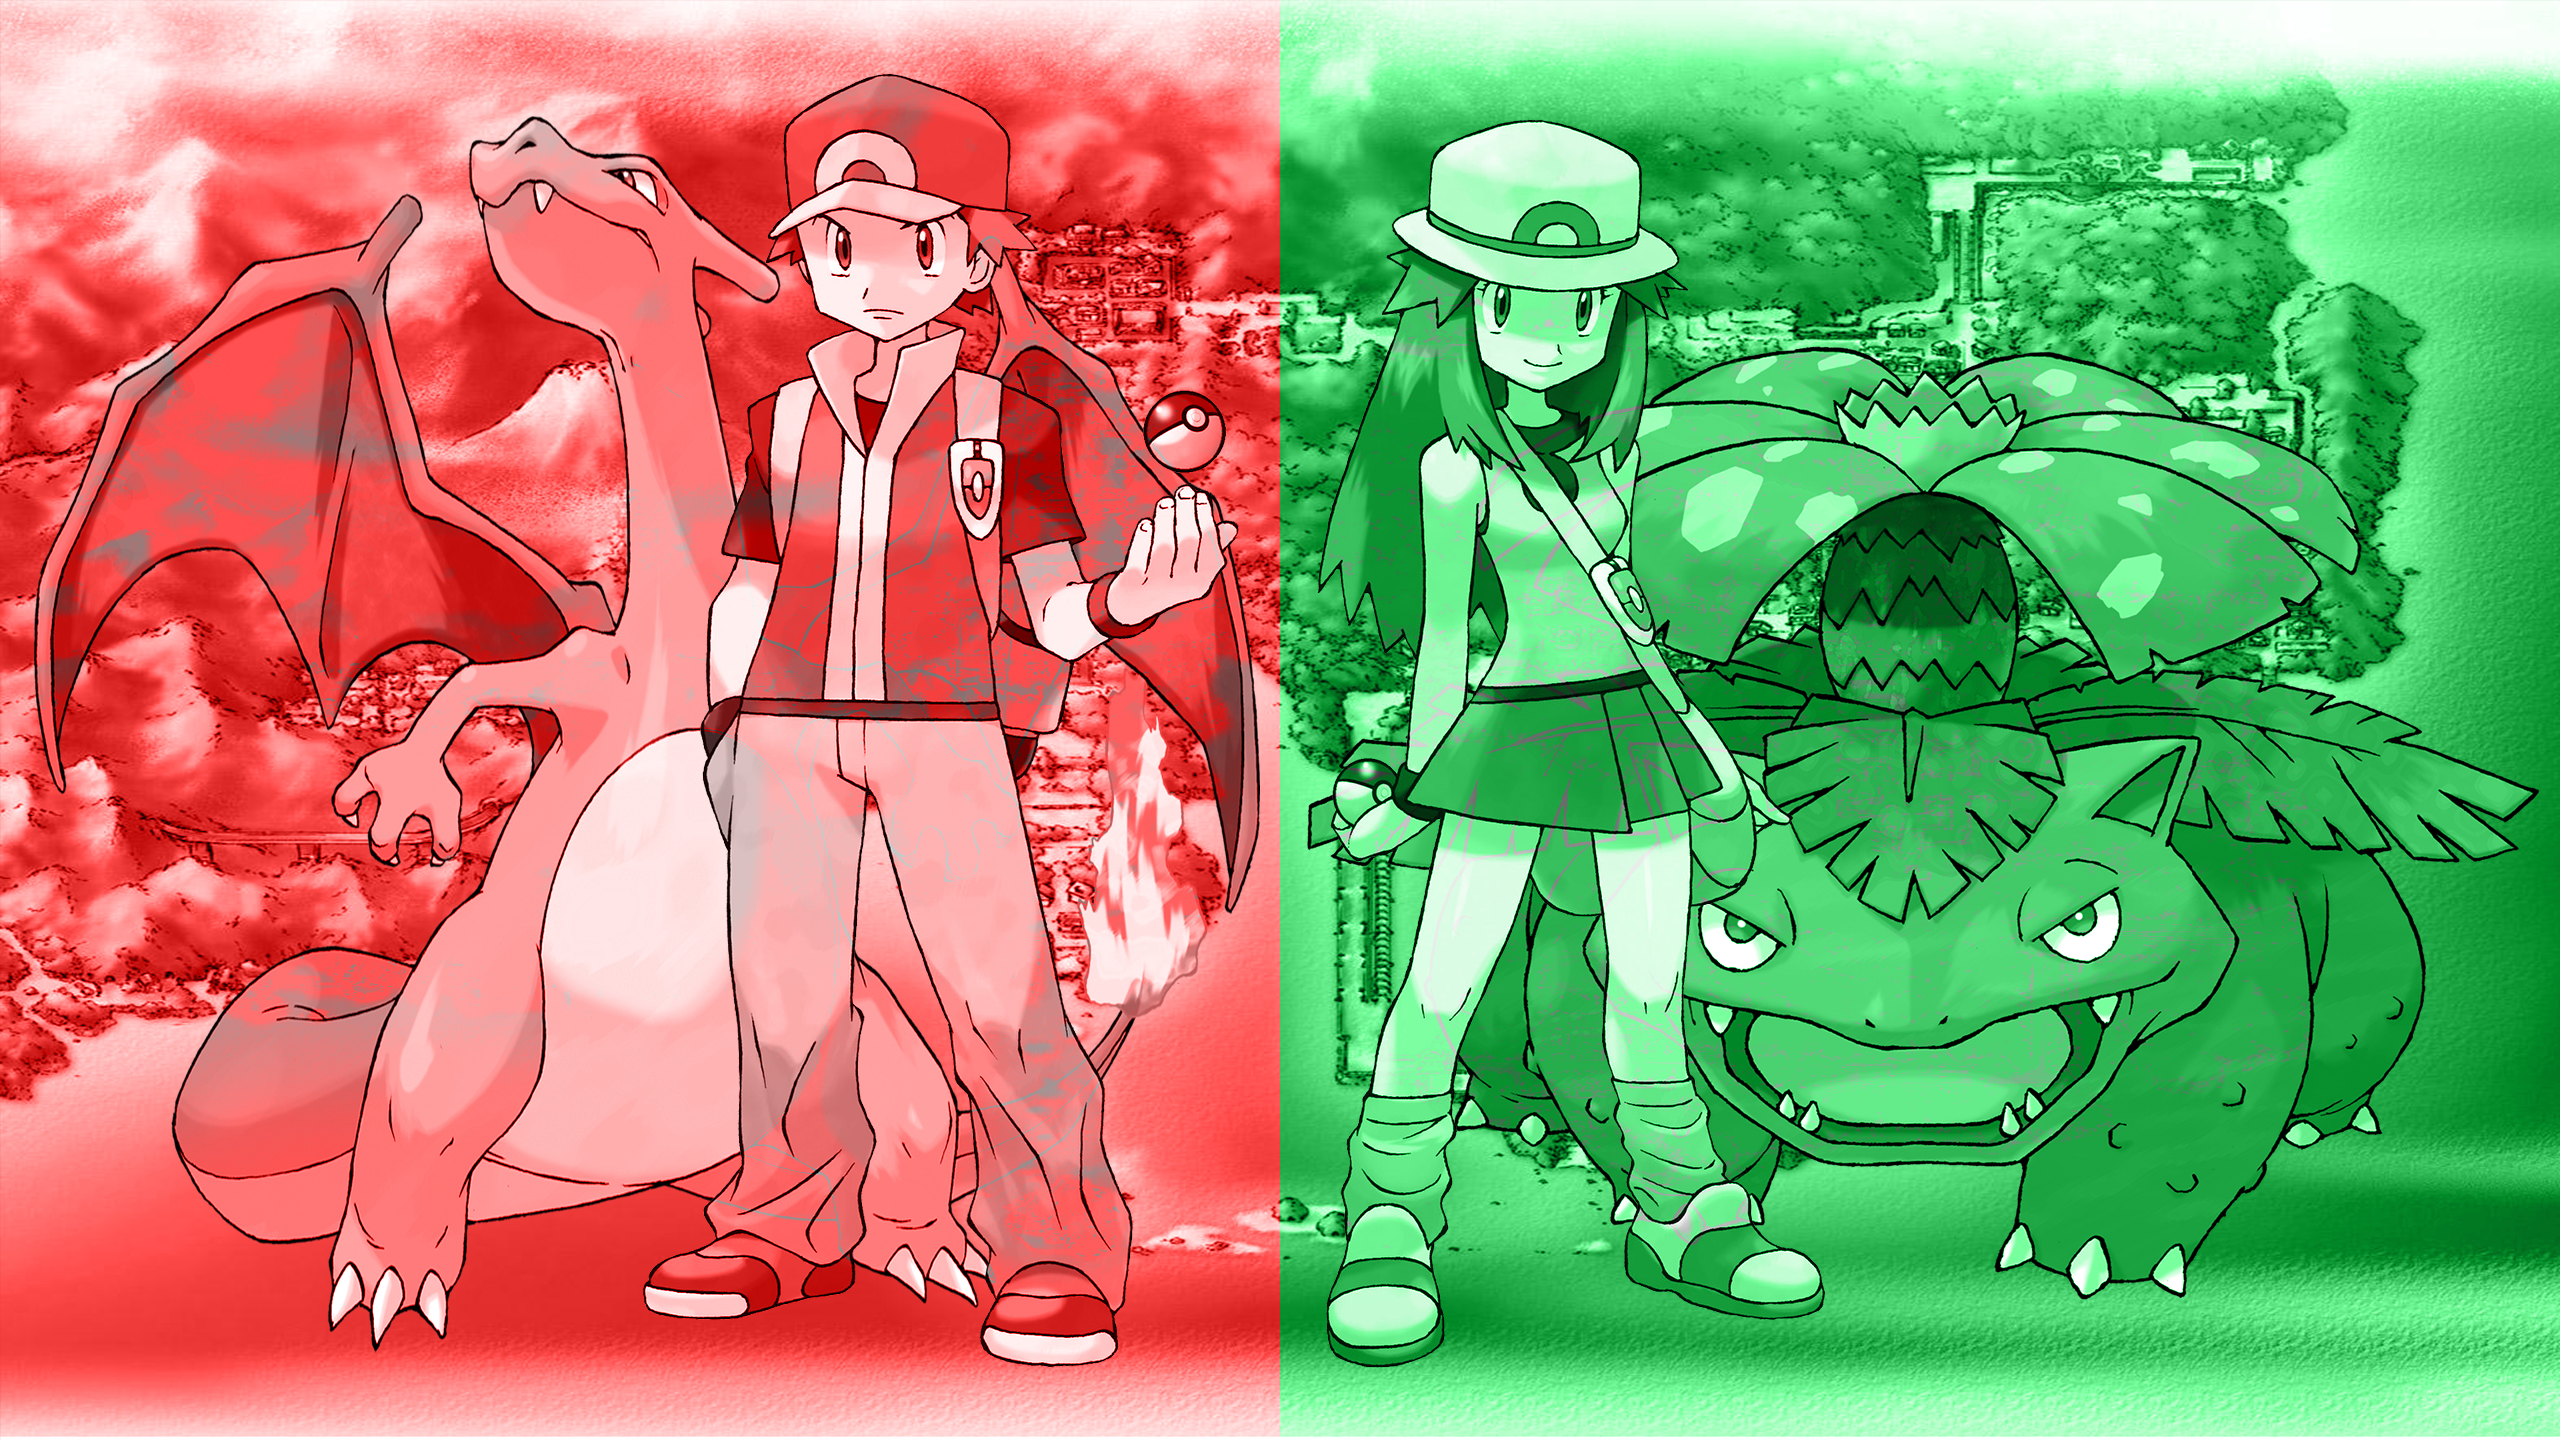 Red (Pokémon) - Pokémon Red & Green - Image by ᴀᴛᴍsɢᴇᴀ